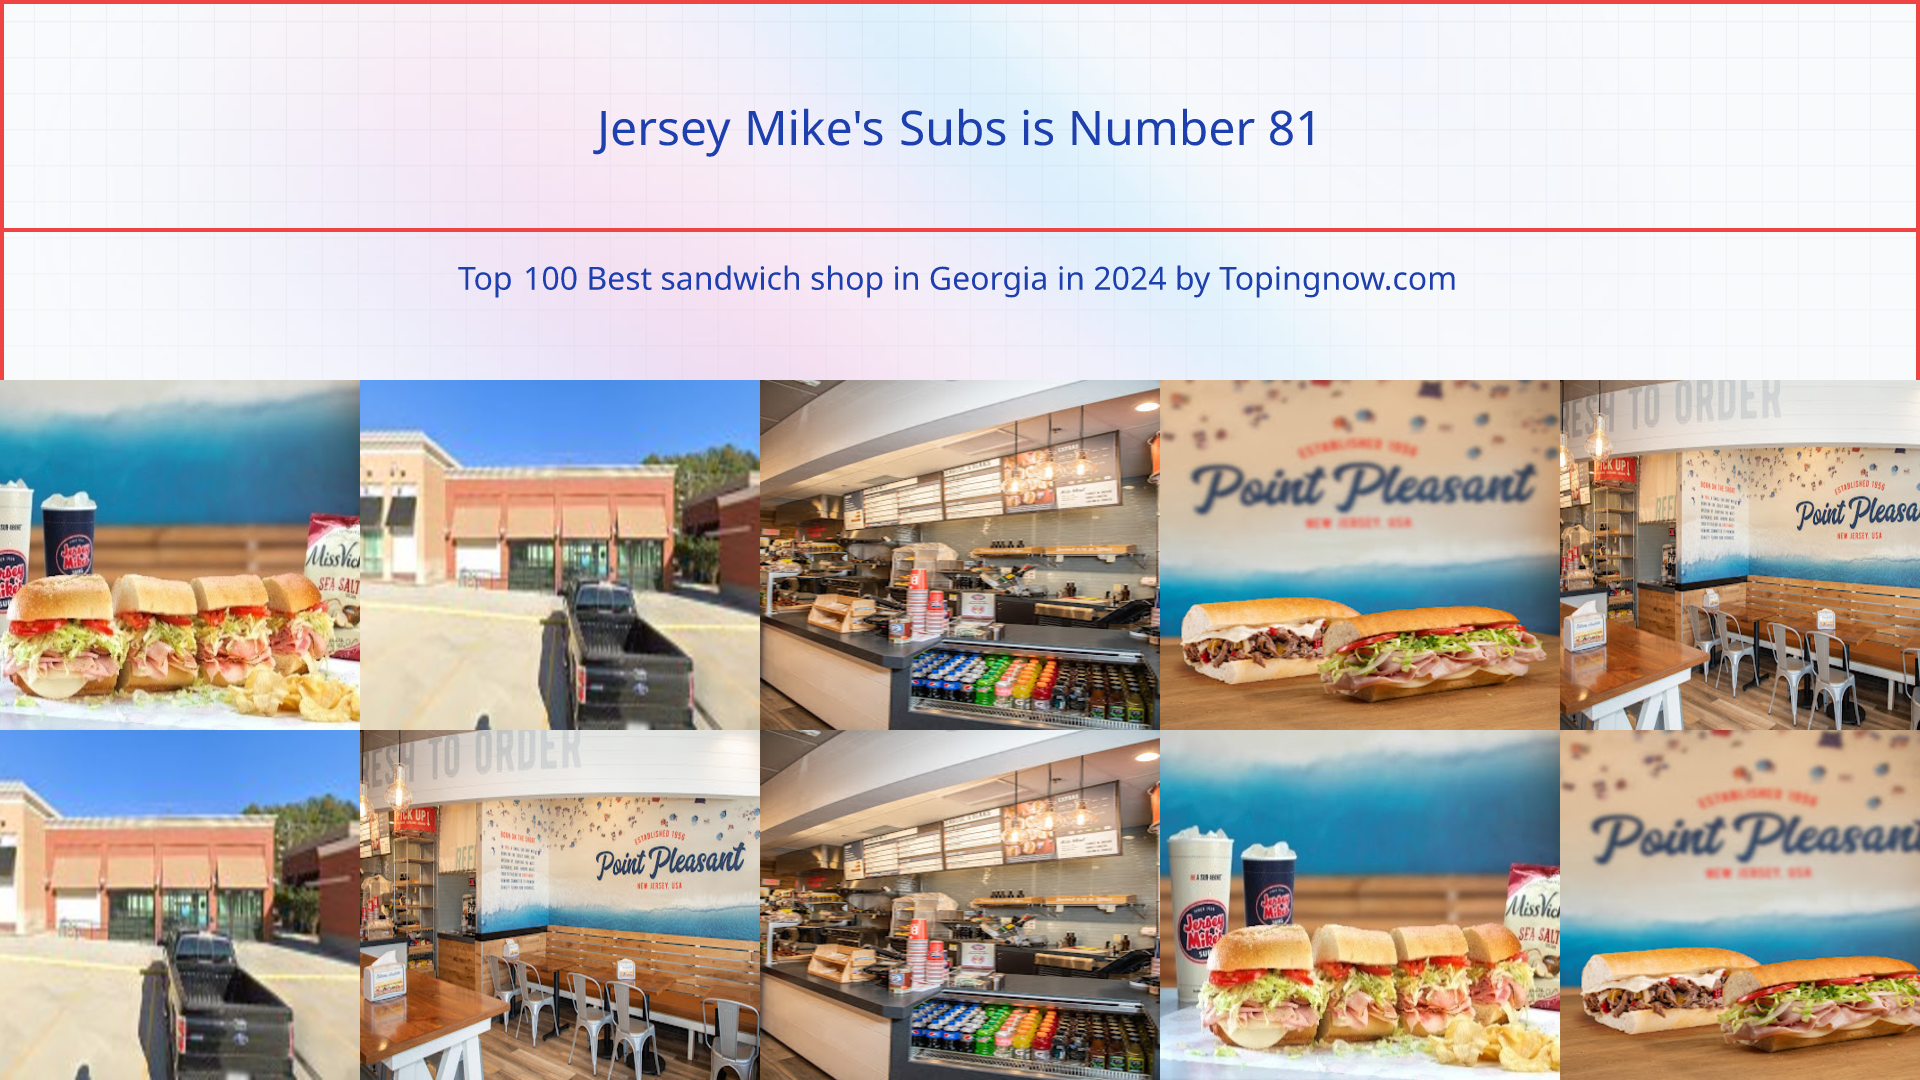 Jersey Mike's Subs: Top 100 Best sandwich shop in Georgia in 2024